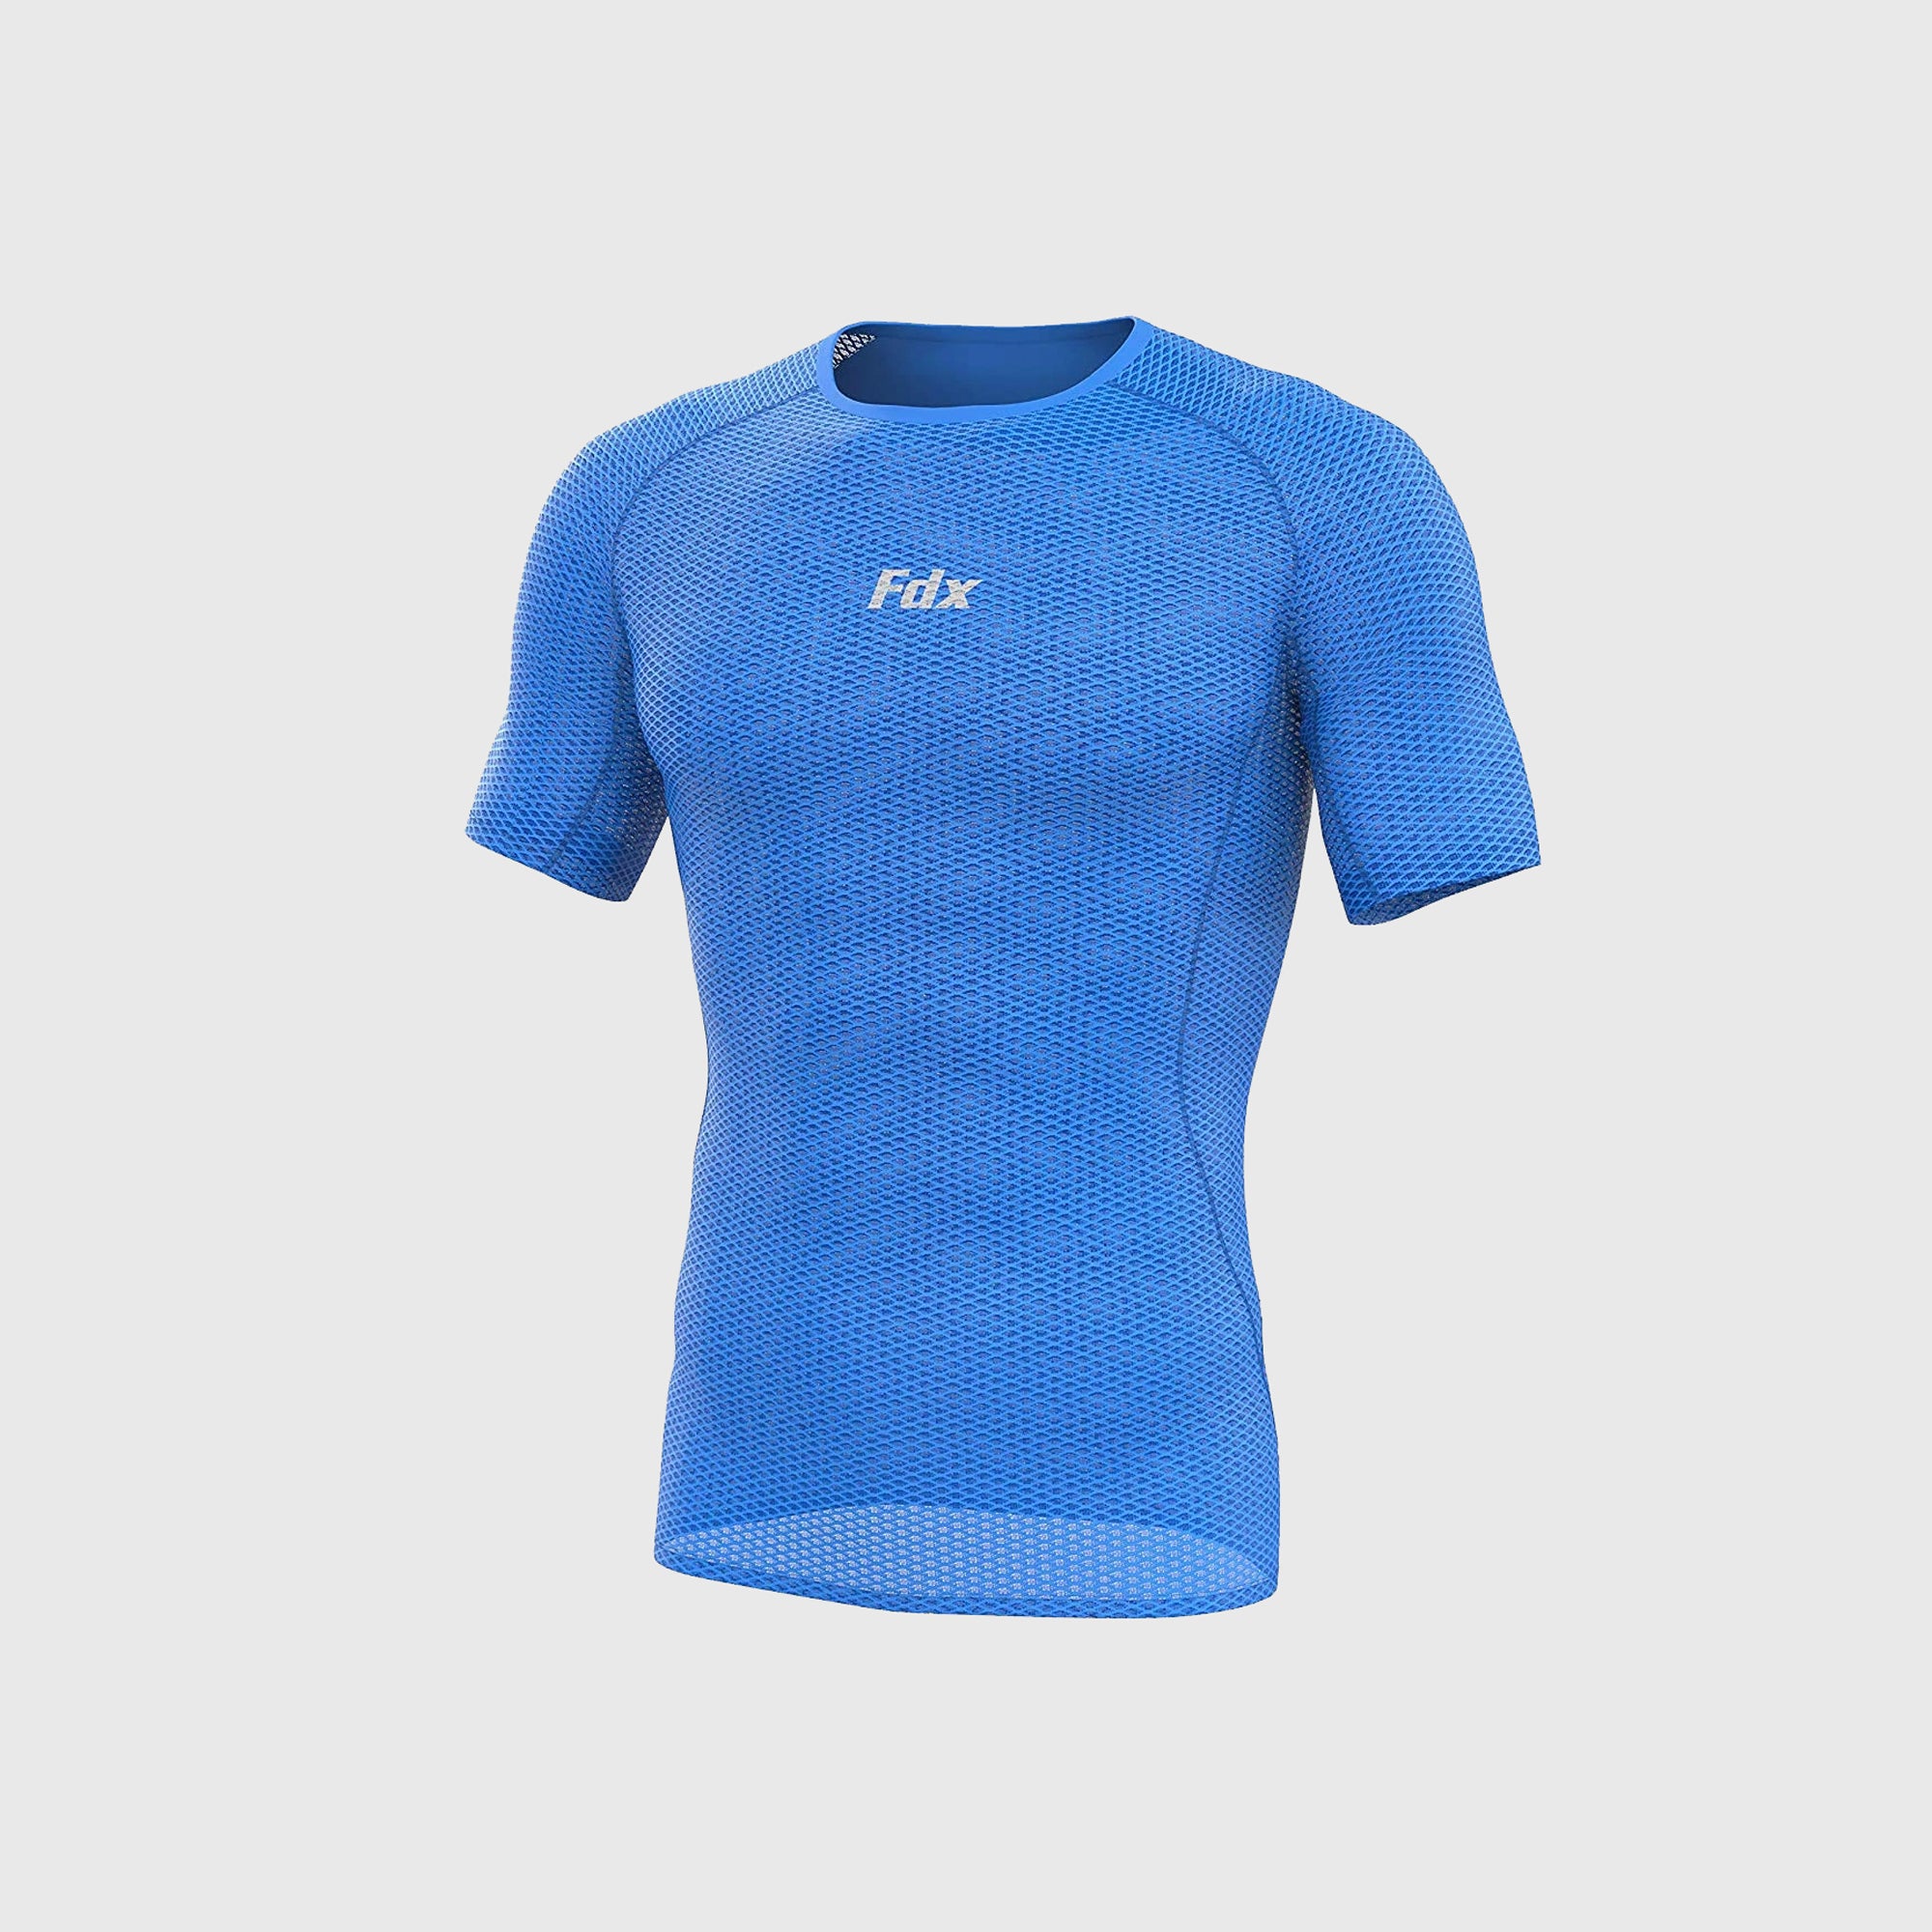 Fdx Mens Blue Short Sleeve Mesh Compression Top Running Gym Workout Wear Rash Guard Stretchable Breathable - Aeroform